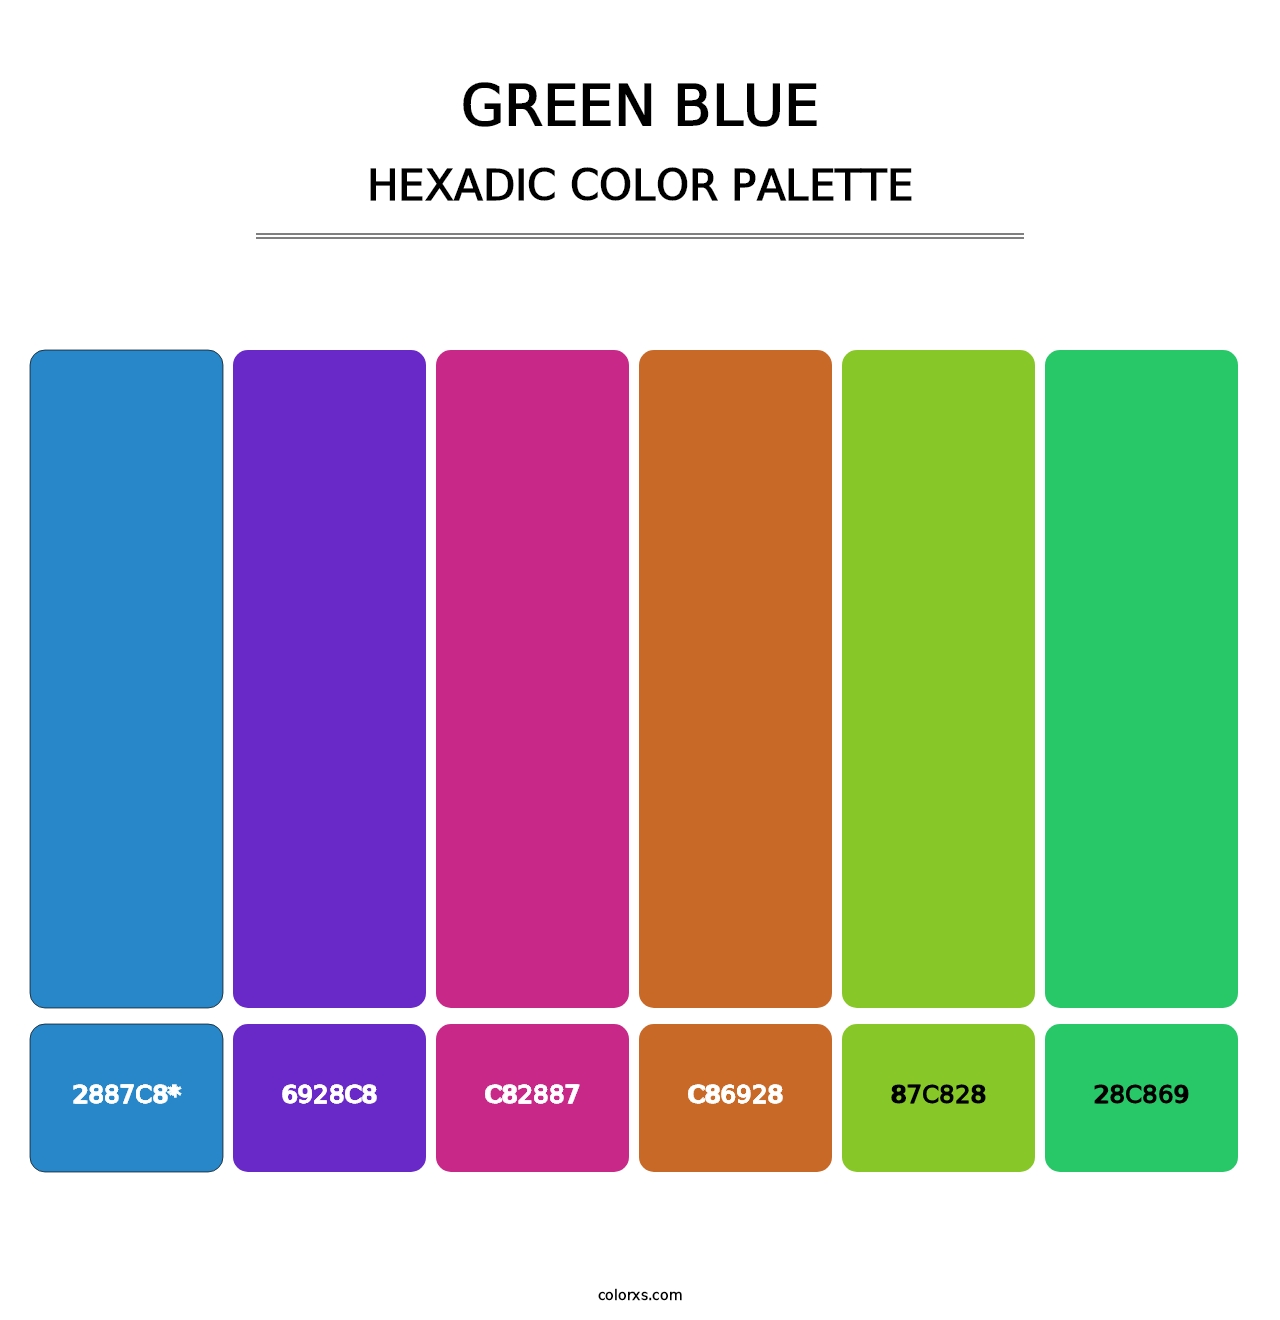 Green Blue - Hexadic Color Palette